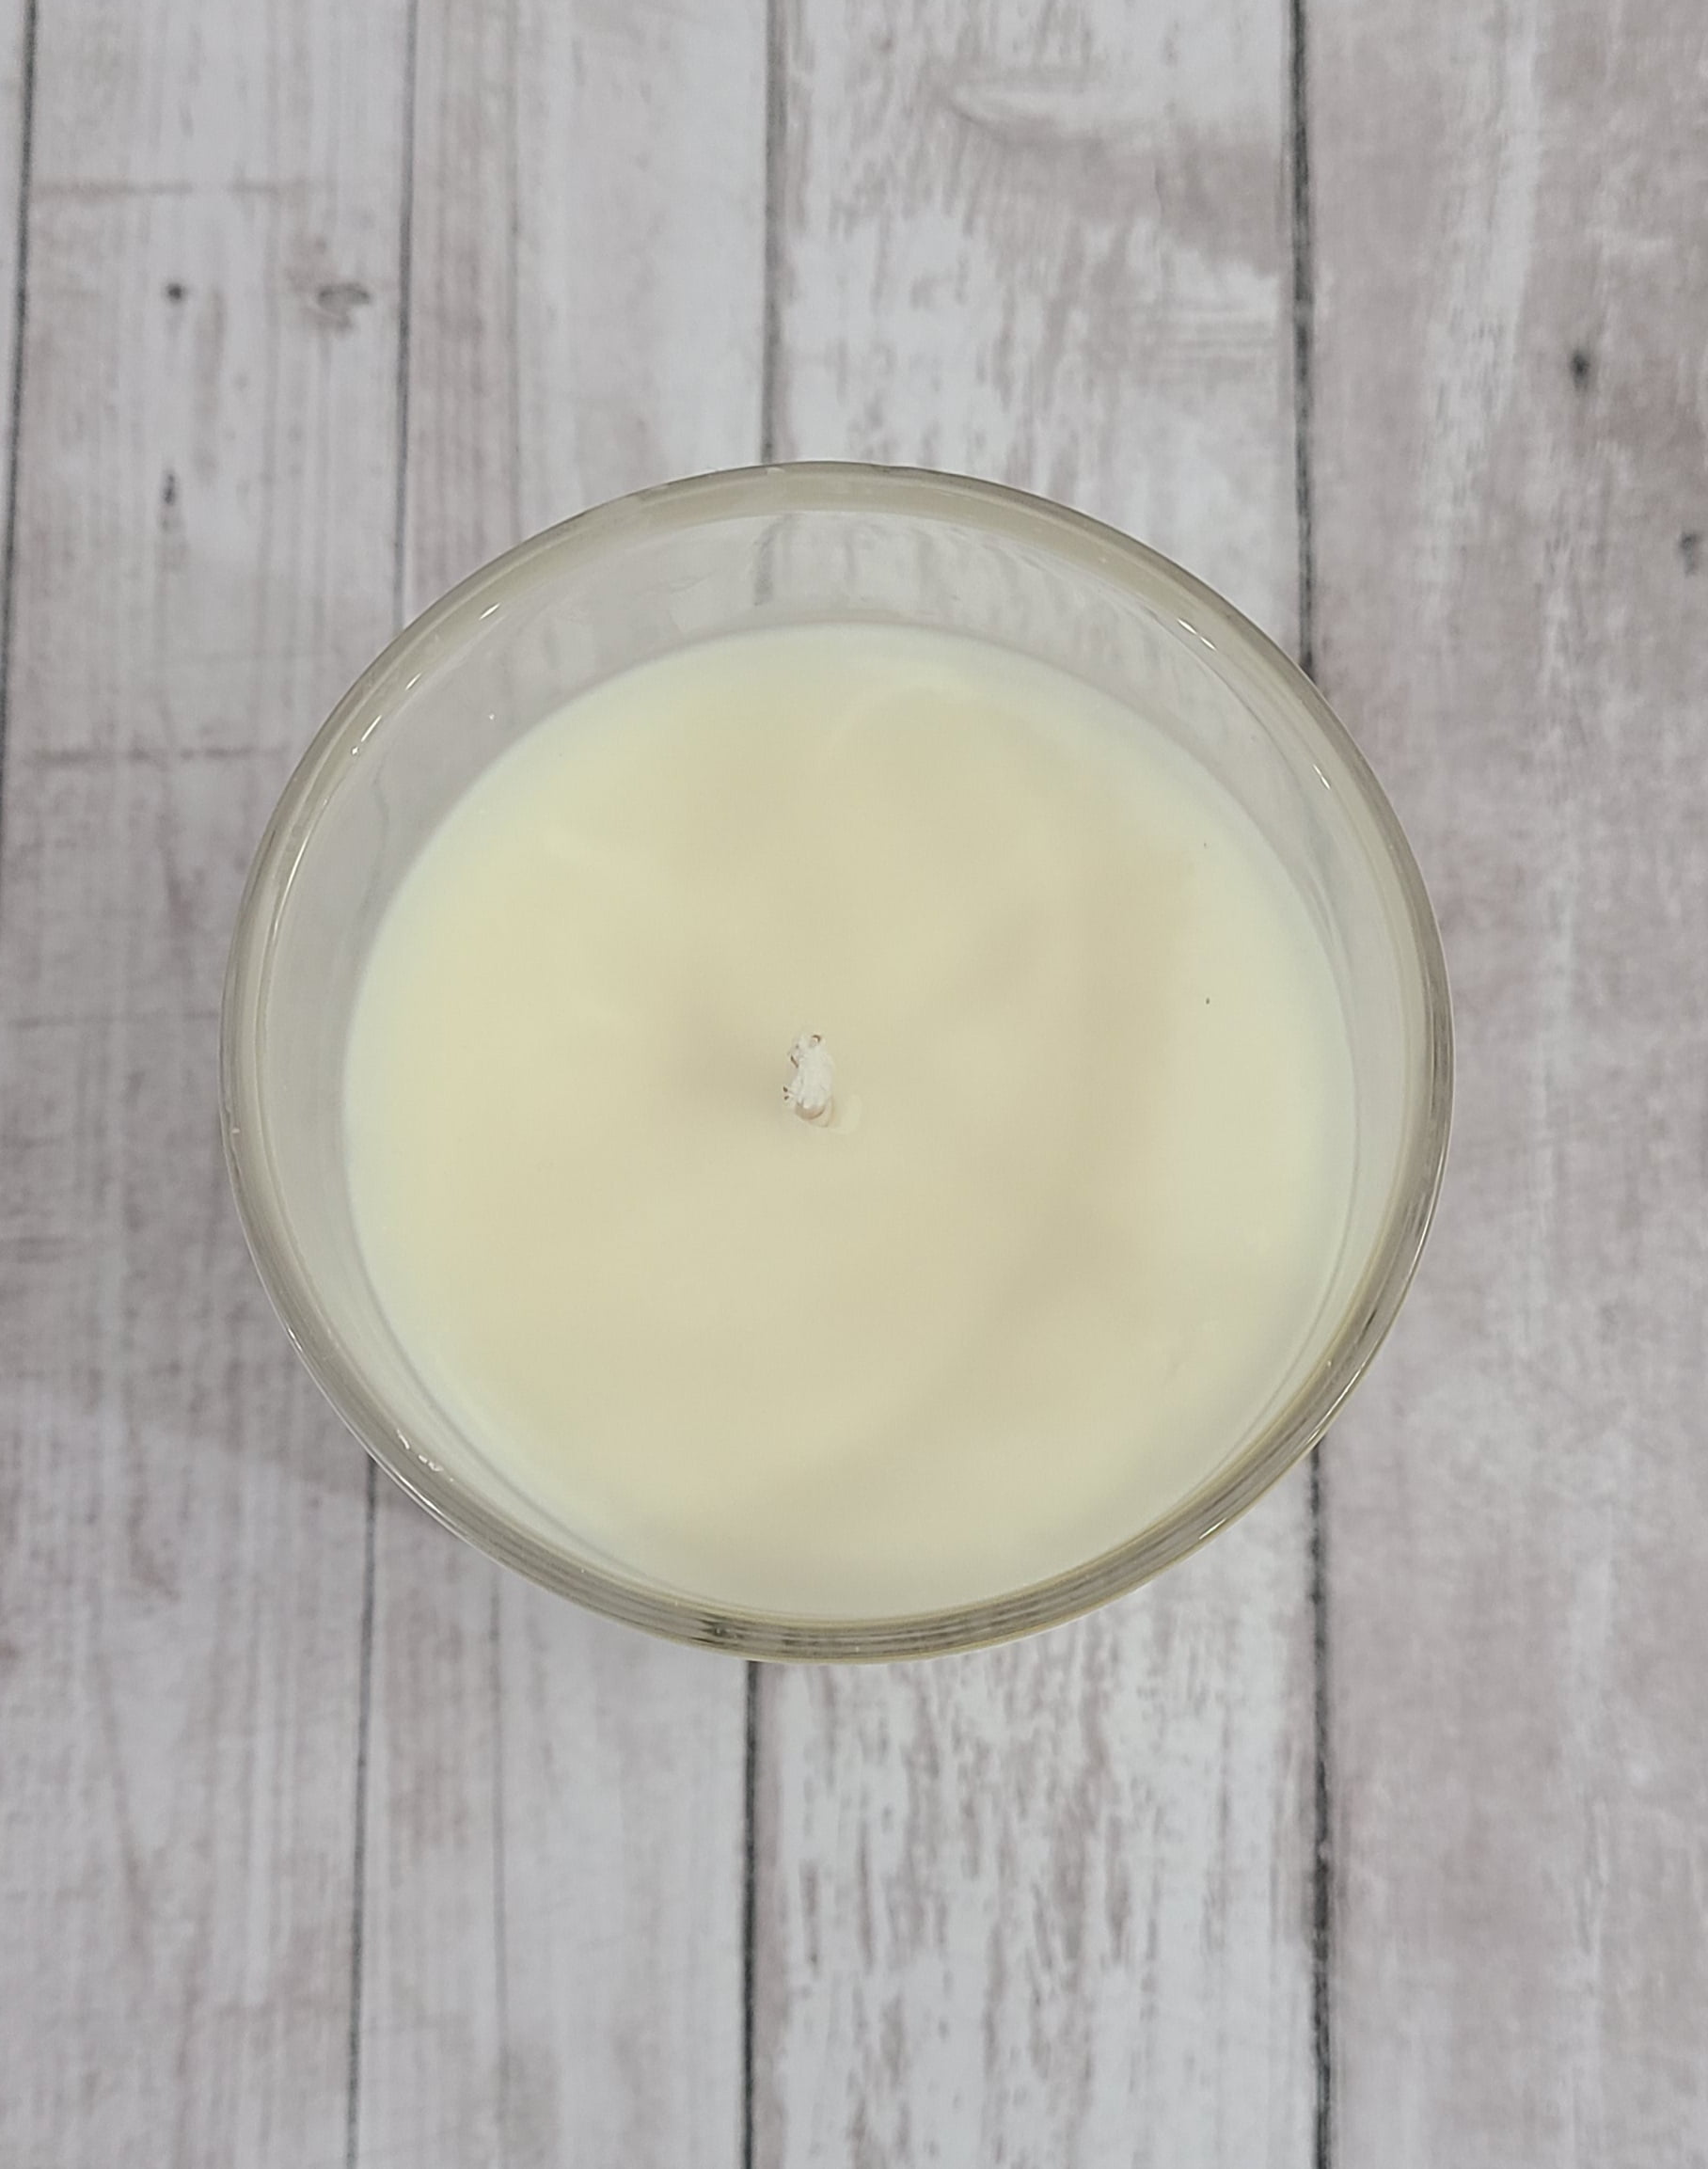 Salt Water Taffy Scented Wax Melt | Kringle Candle